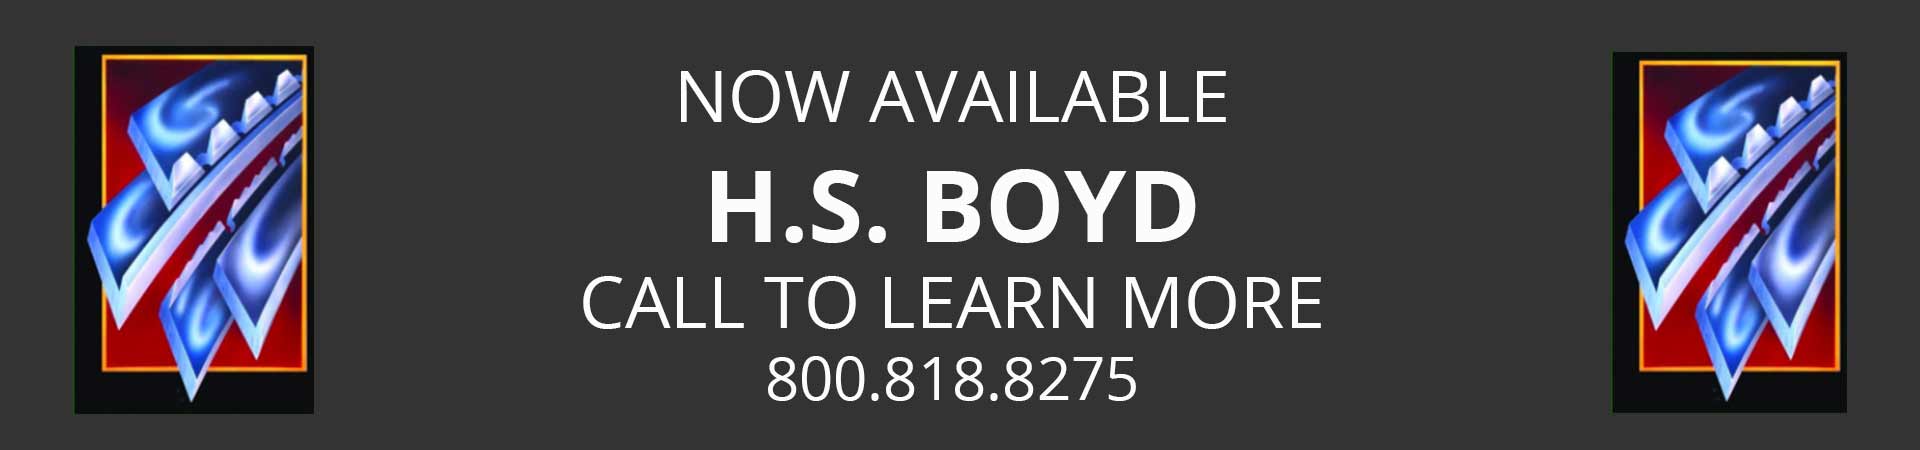 HS BOYD Now Available